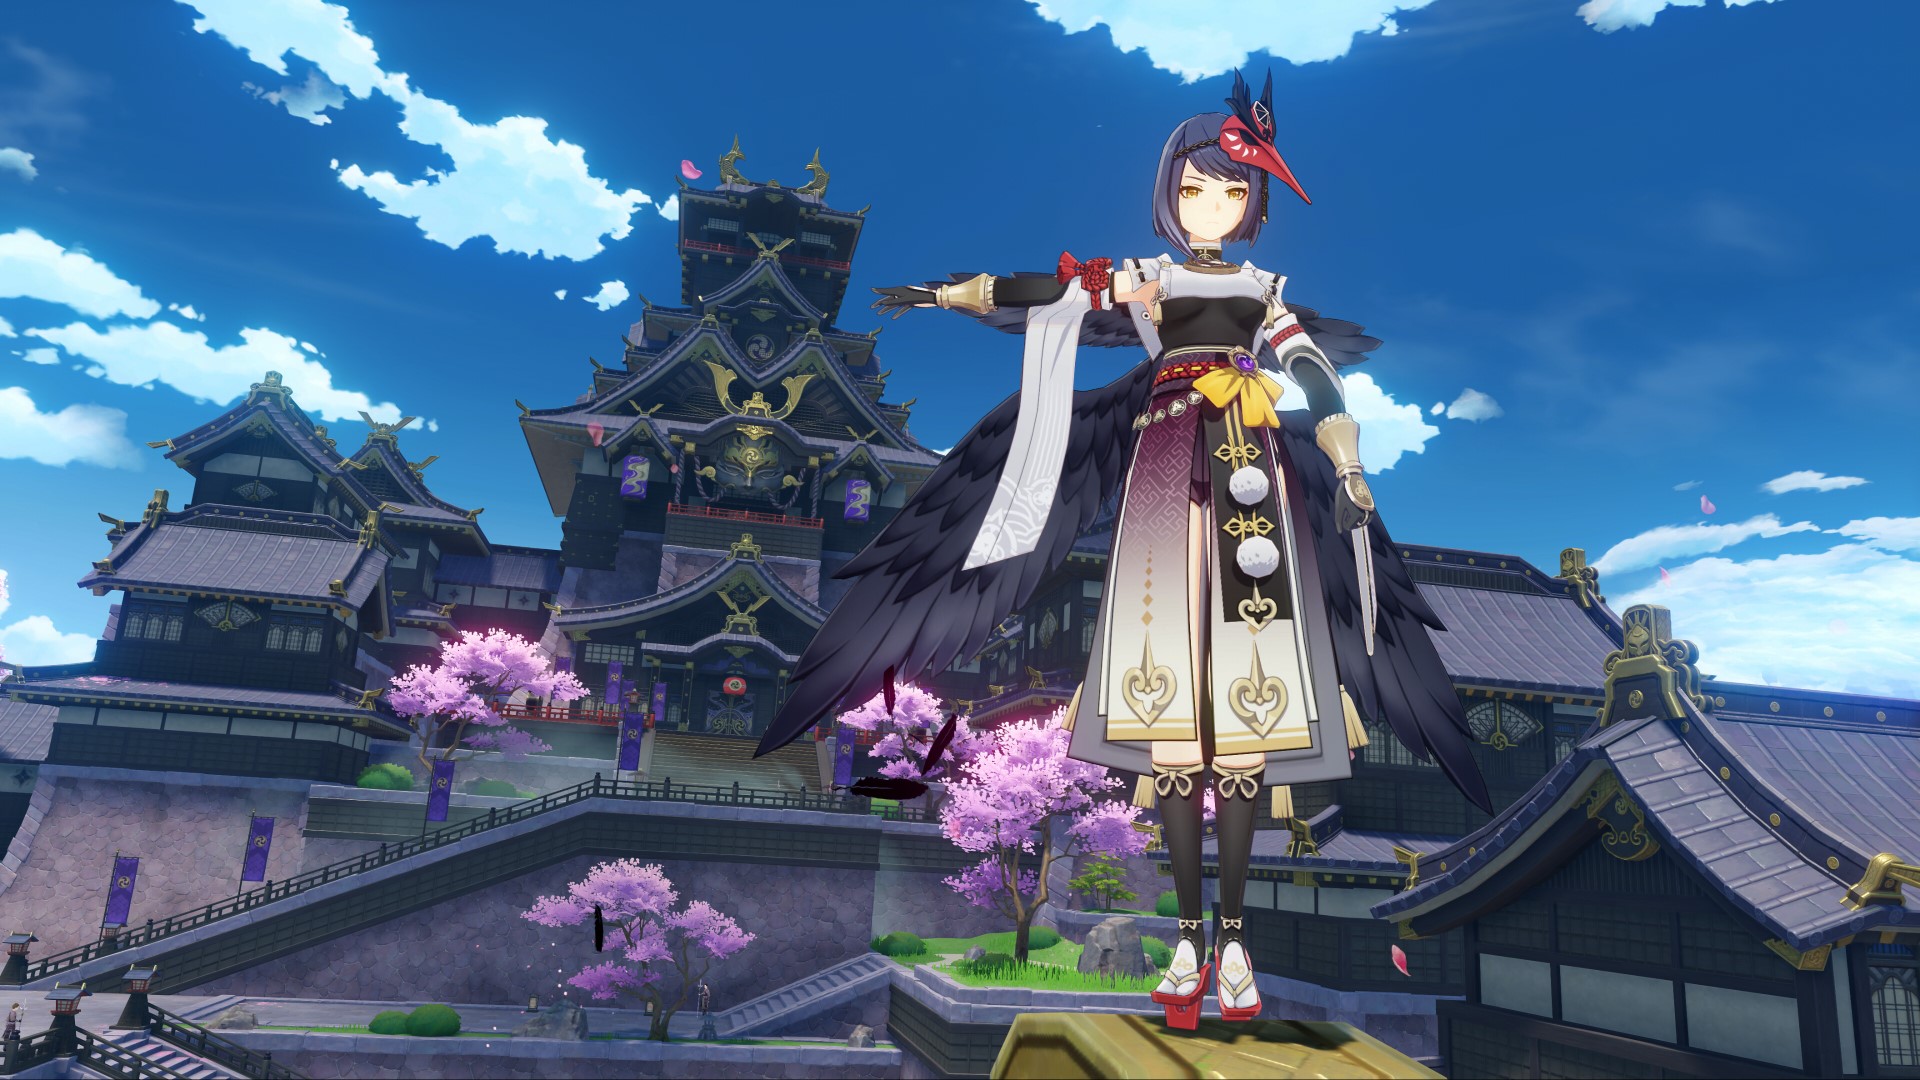 Sara from Genshin Impact standing outside Raiden Shogun's castle